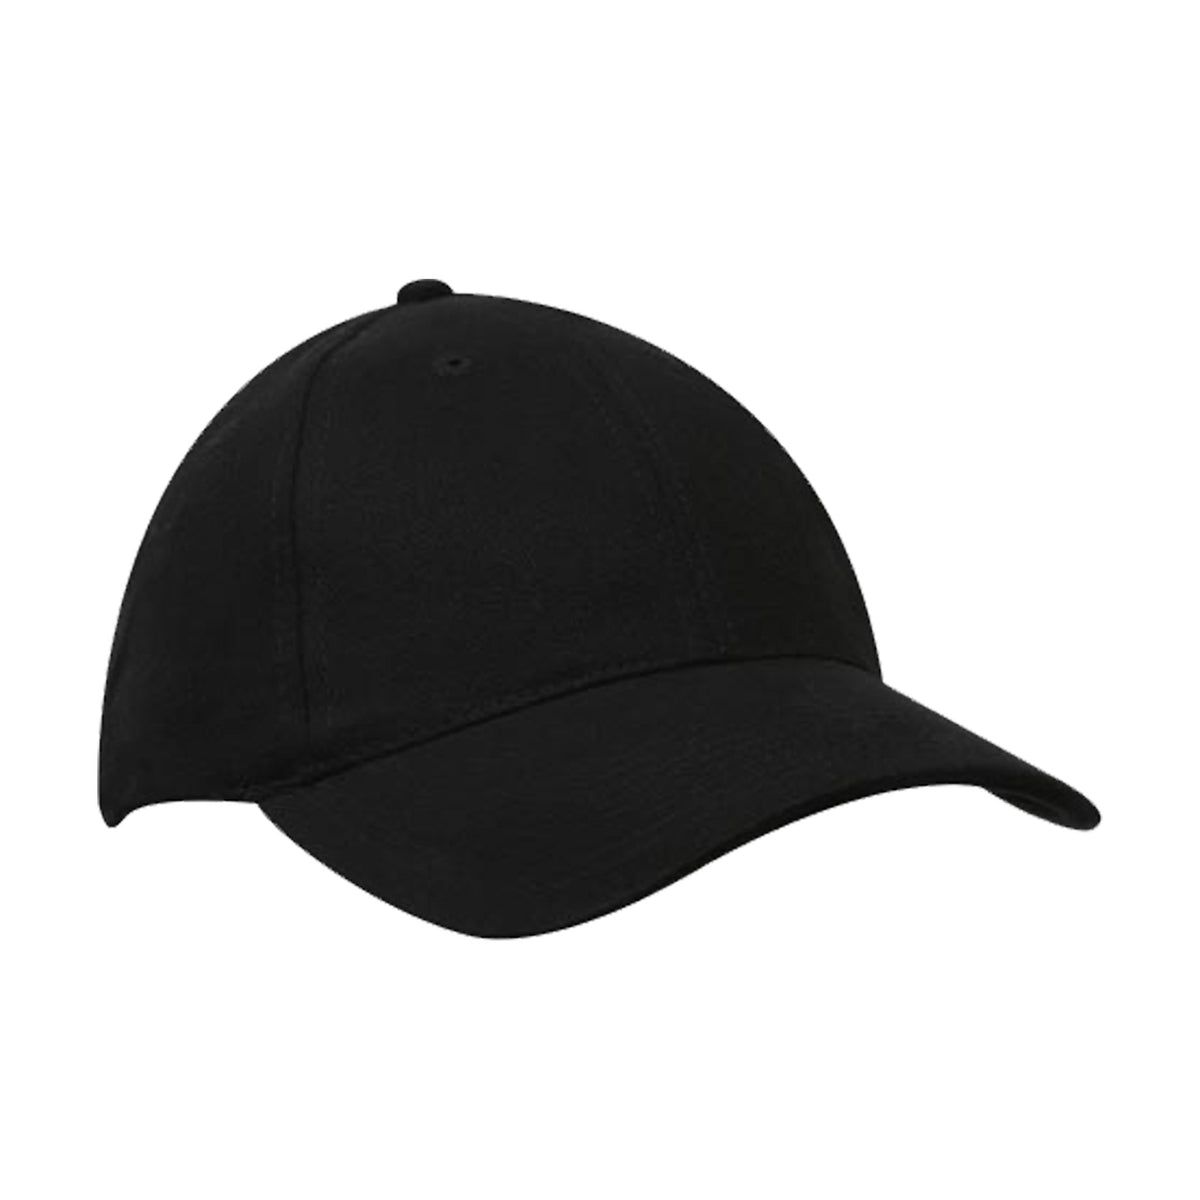 black brushed cotton baseball cap